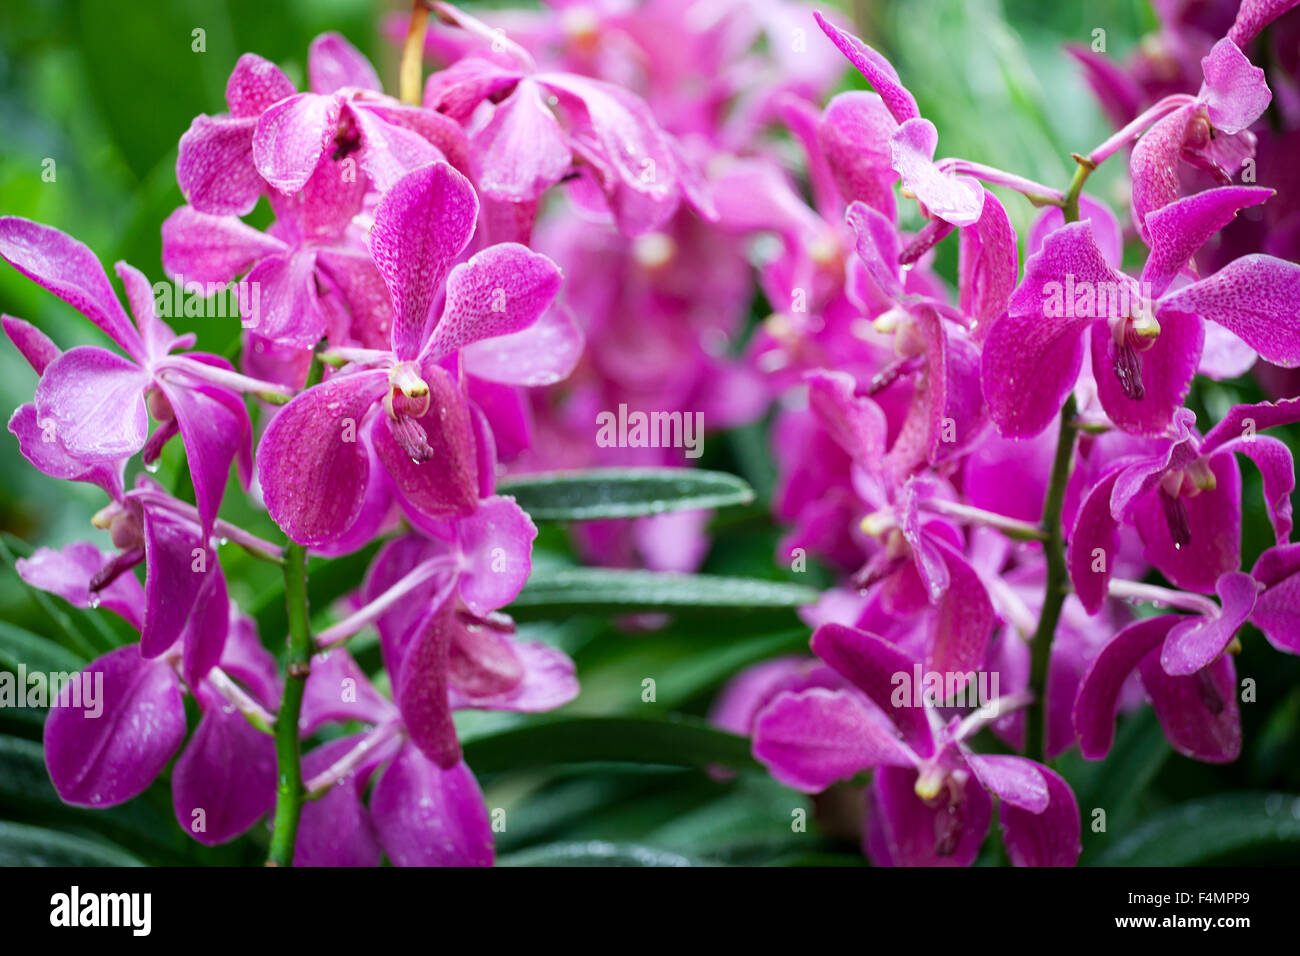 Tulips at Singapore Botanic Gardens Stock Photo